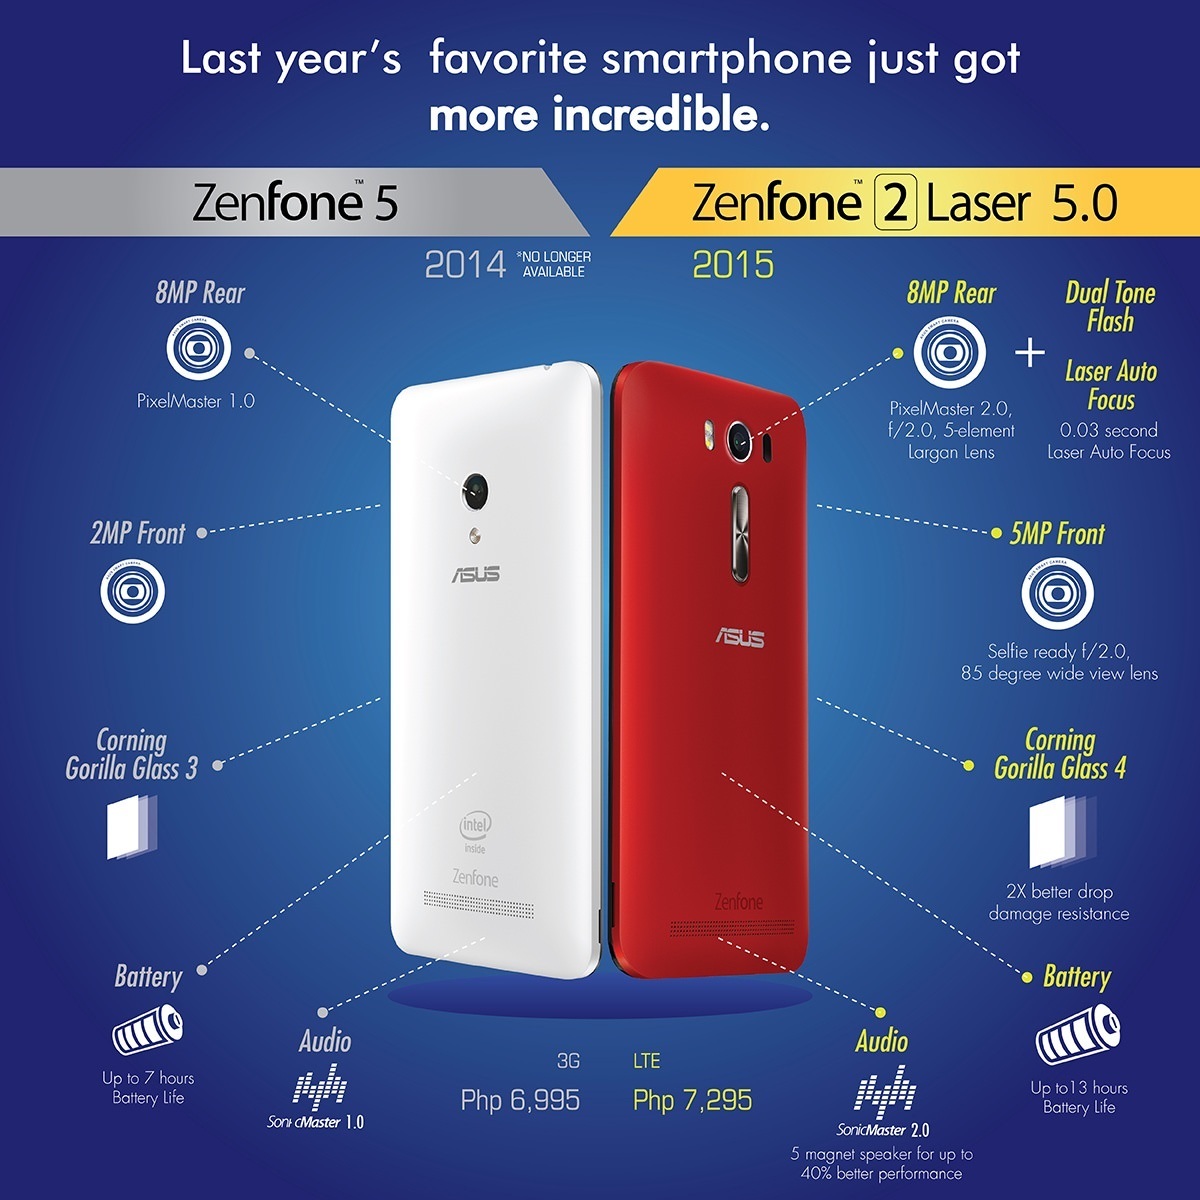 Travel Gadget Review: Asus Zenfone 2 Laser 5.0